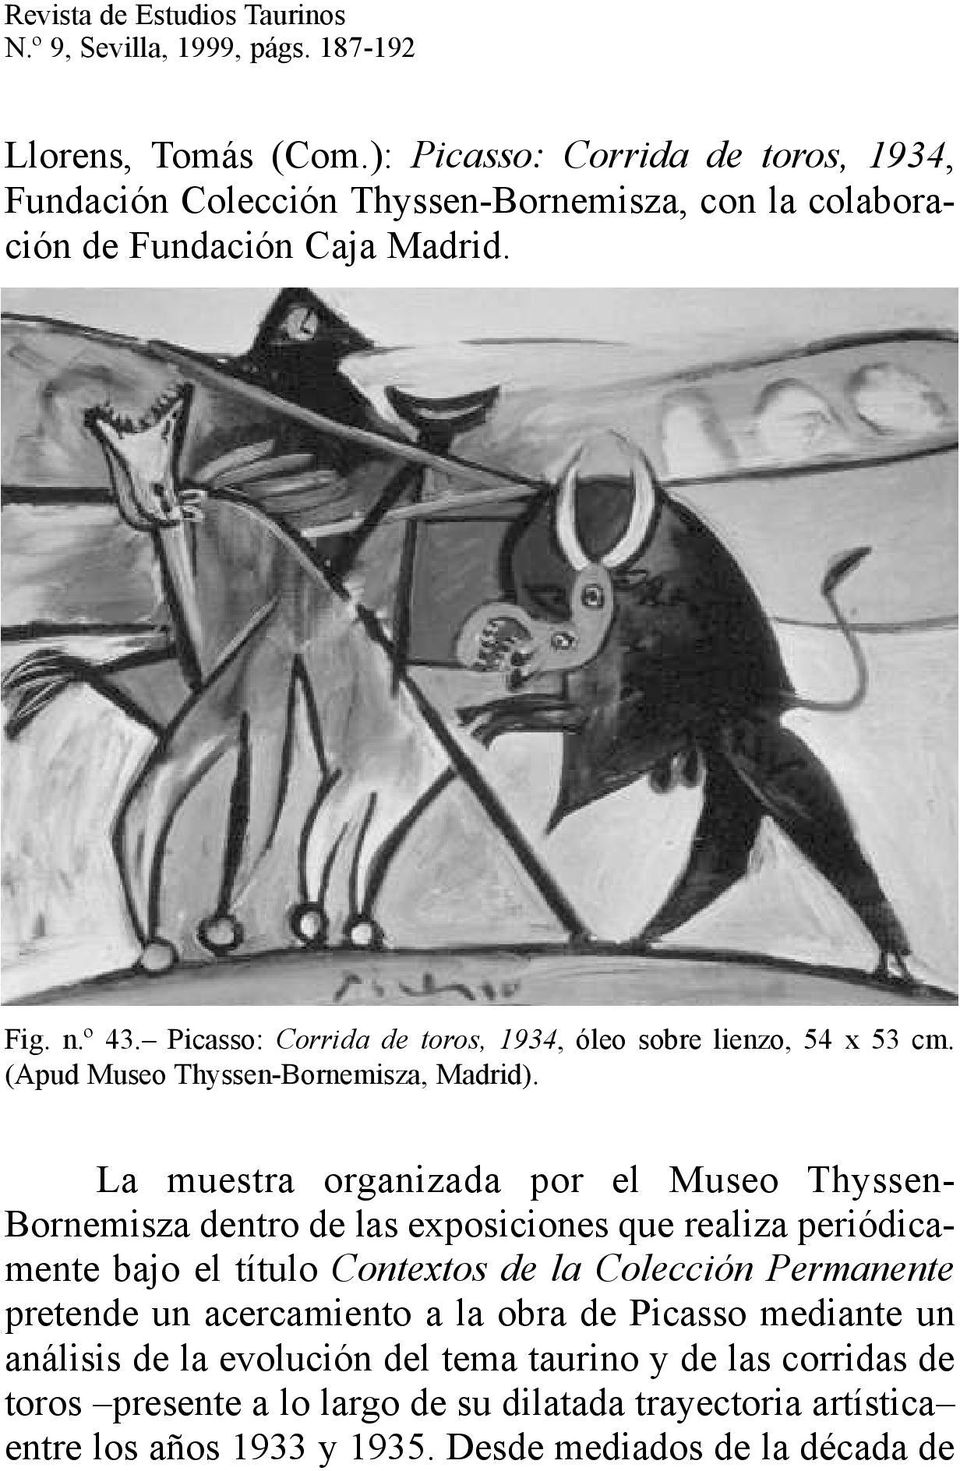 Picasso: Corrida de toros, 1934, óleo sobre lienzo, 54 x 53 cm. (Apud Museo Thyssen-Bornemisza, Madrid).